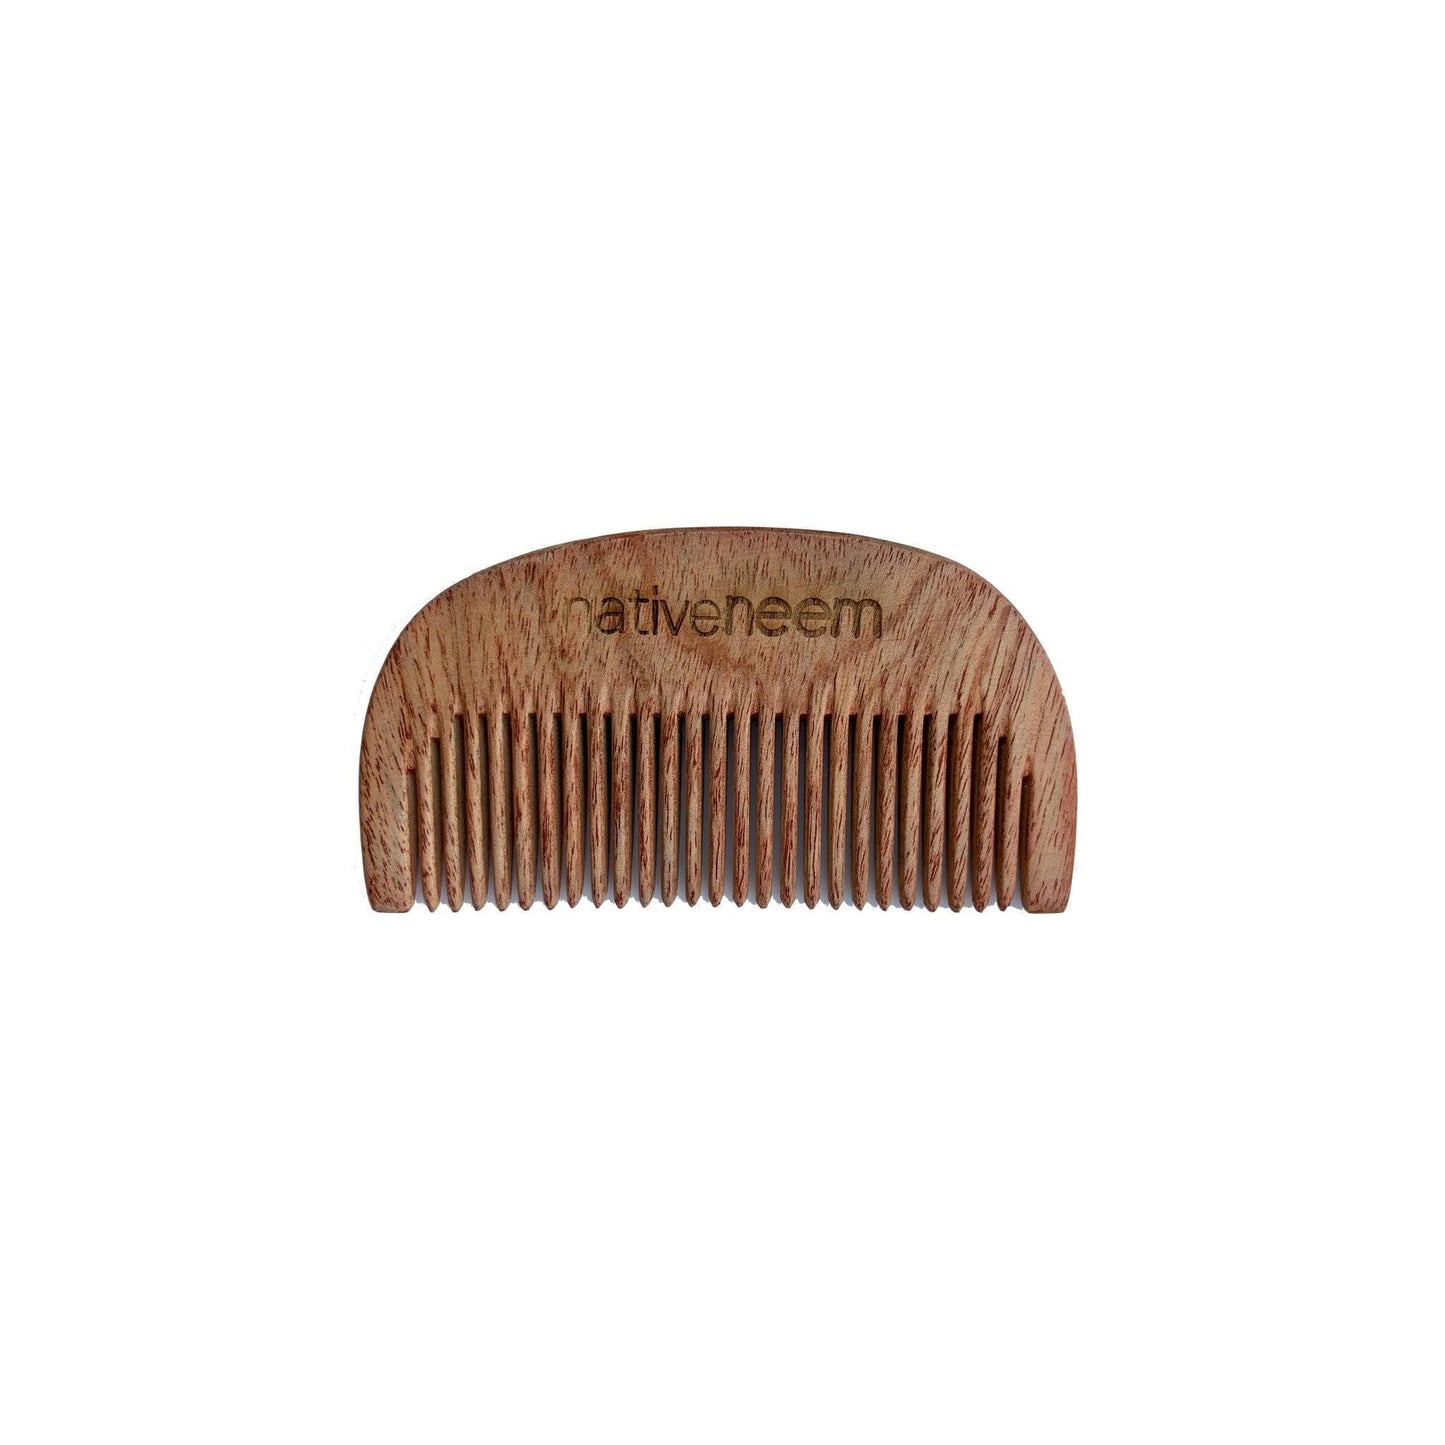 Wooden Neem Comb Narrow Tooth - NativeNeem